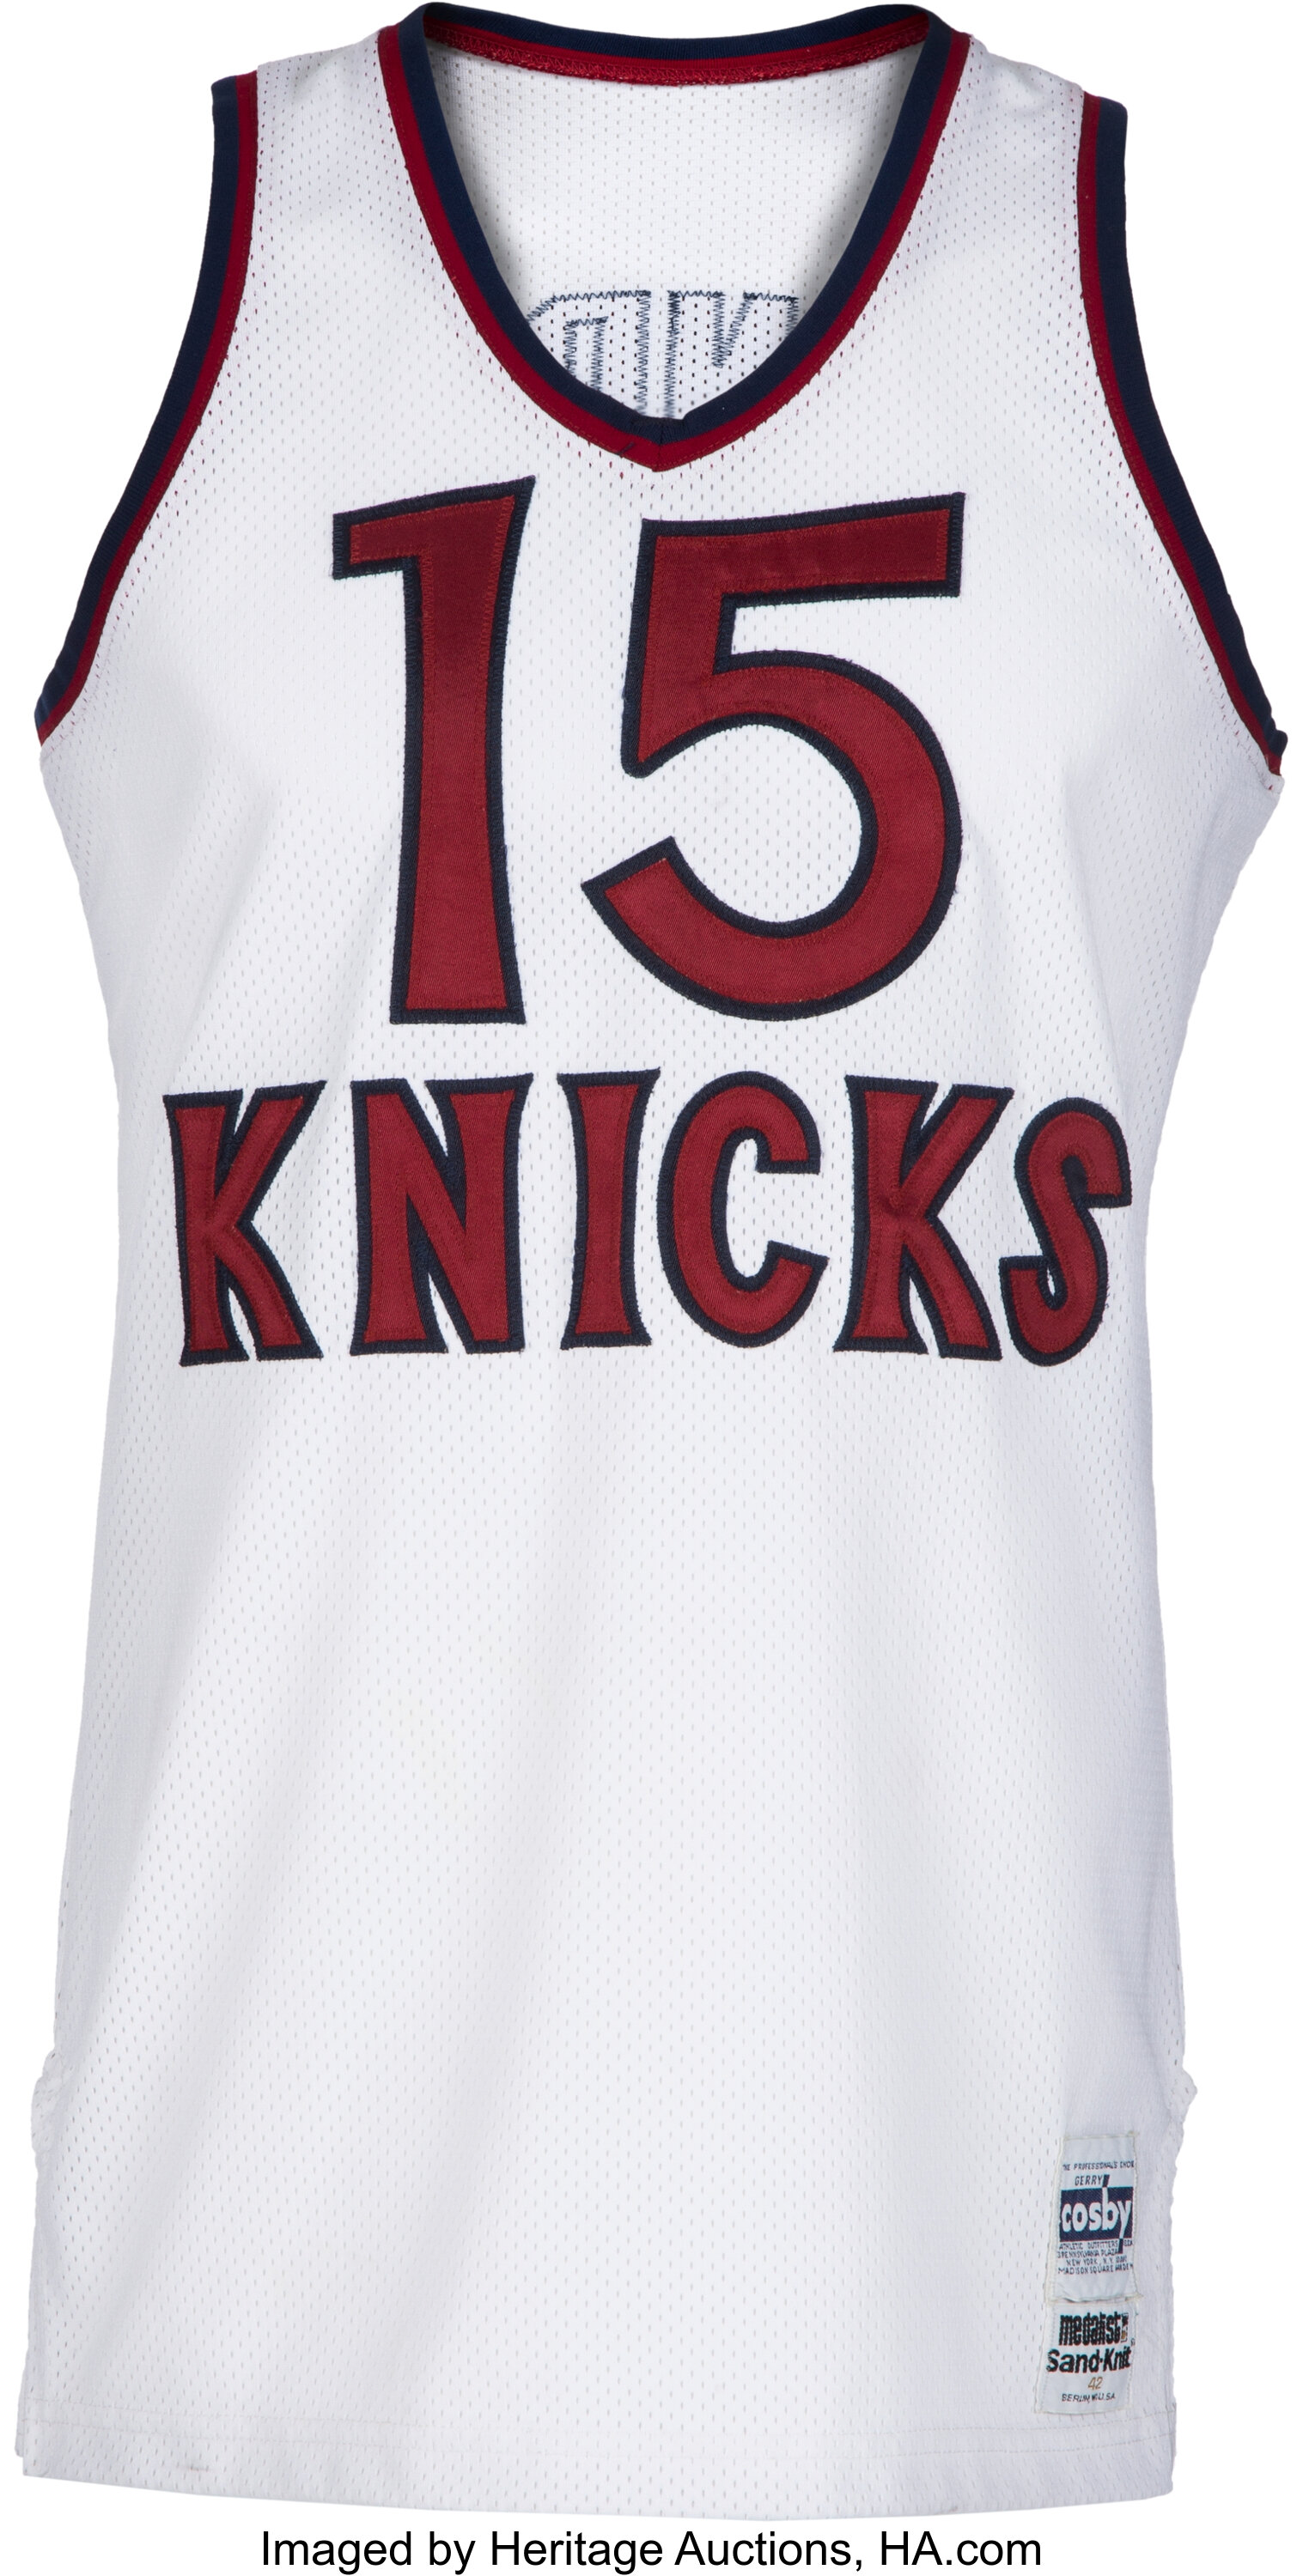 New York Knicks Clothing